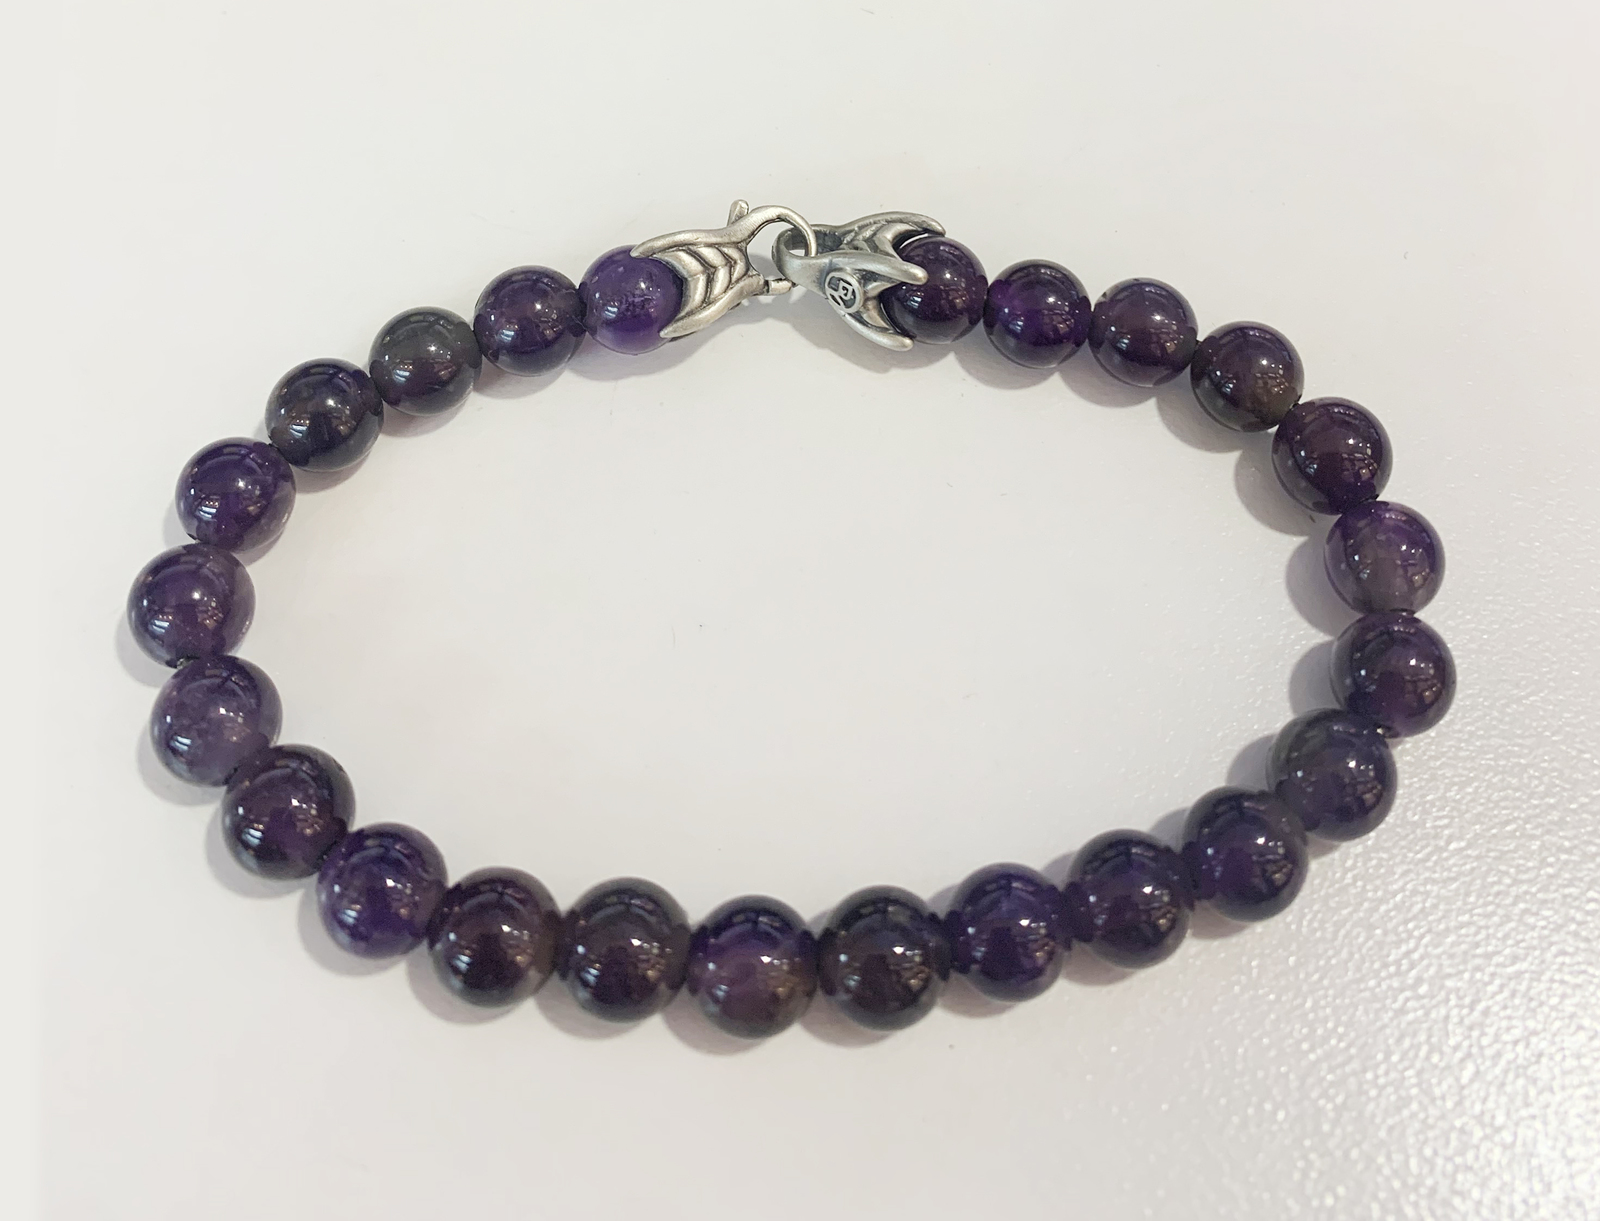 Primary image for David Yurman Spiritual Beads Bracelet with Amethyst 